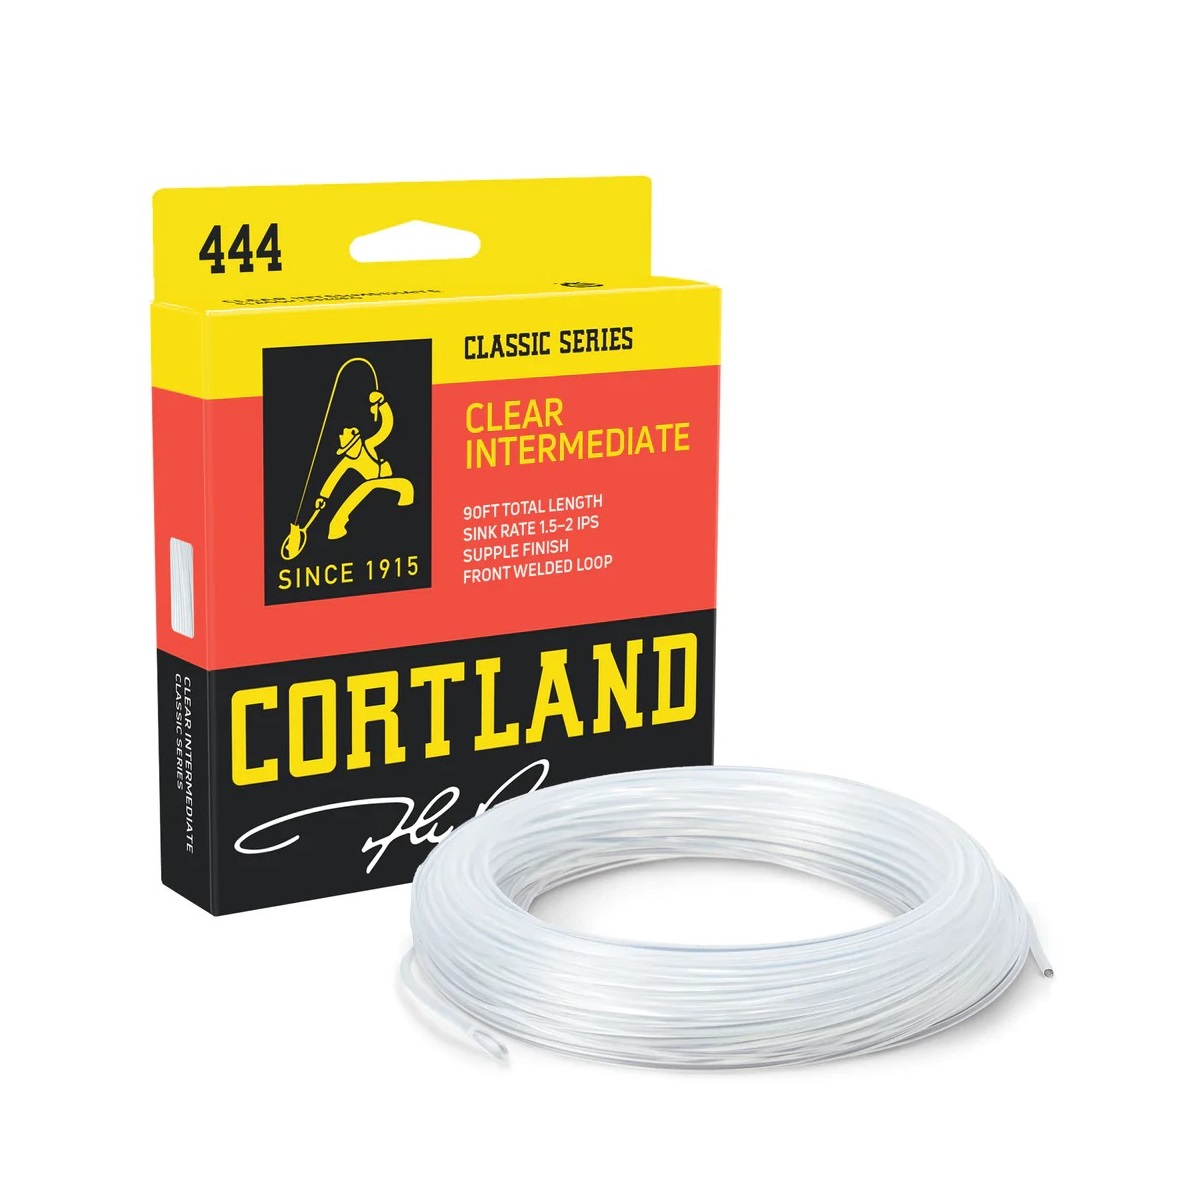 Cortland Cortland muškařská šnůra 444 Classic Intermediate Clear Fresh/Salt|WF5I 90ft